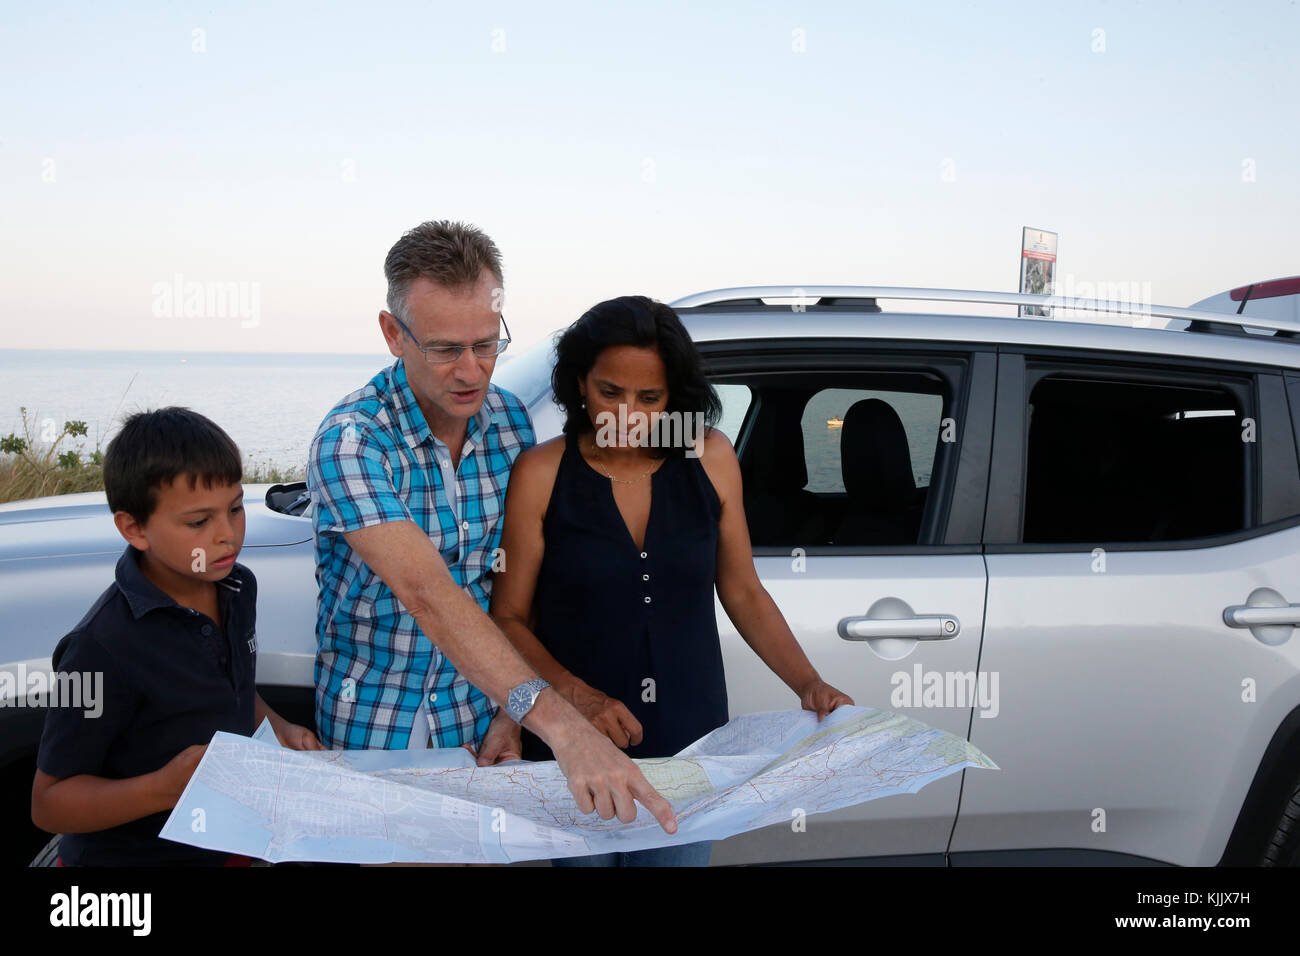 Vacationing family looking at a map. Stock Photo